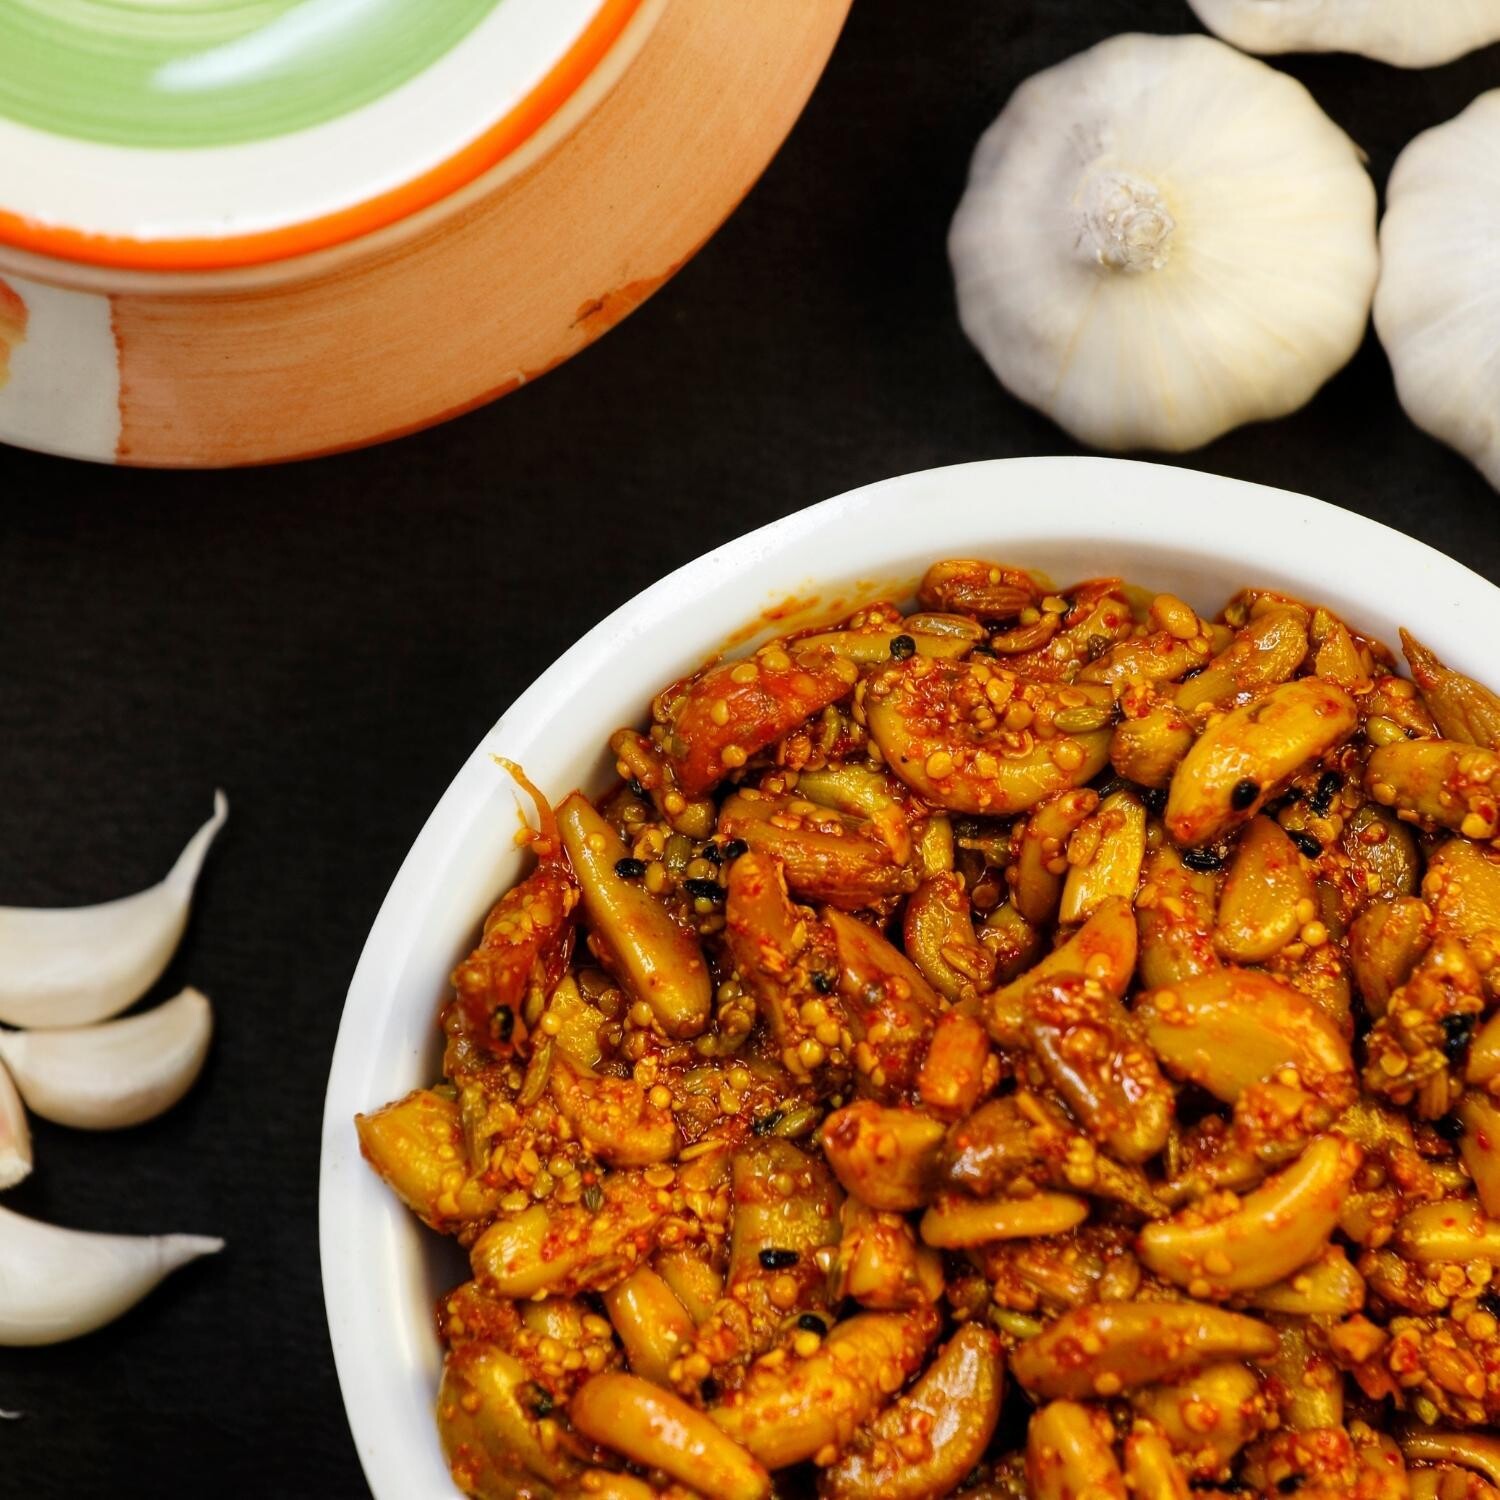 Banarasi Garlic lehsun Pickle | Lehsun ka Achar | Spiced Garlic Pickle | Original Home Made Taste with Mustard Oil | Pantry Must Have | 400GM | Pack of 1